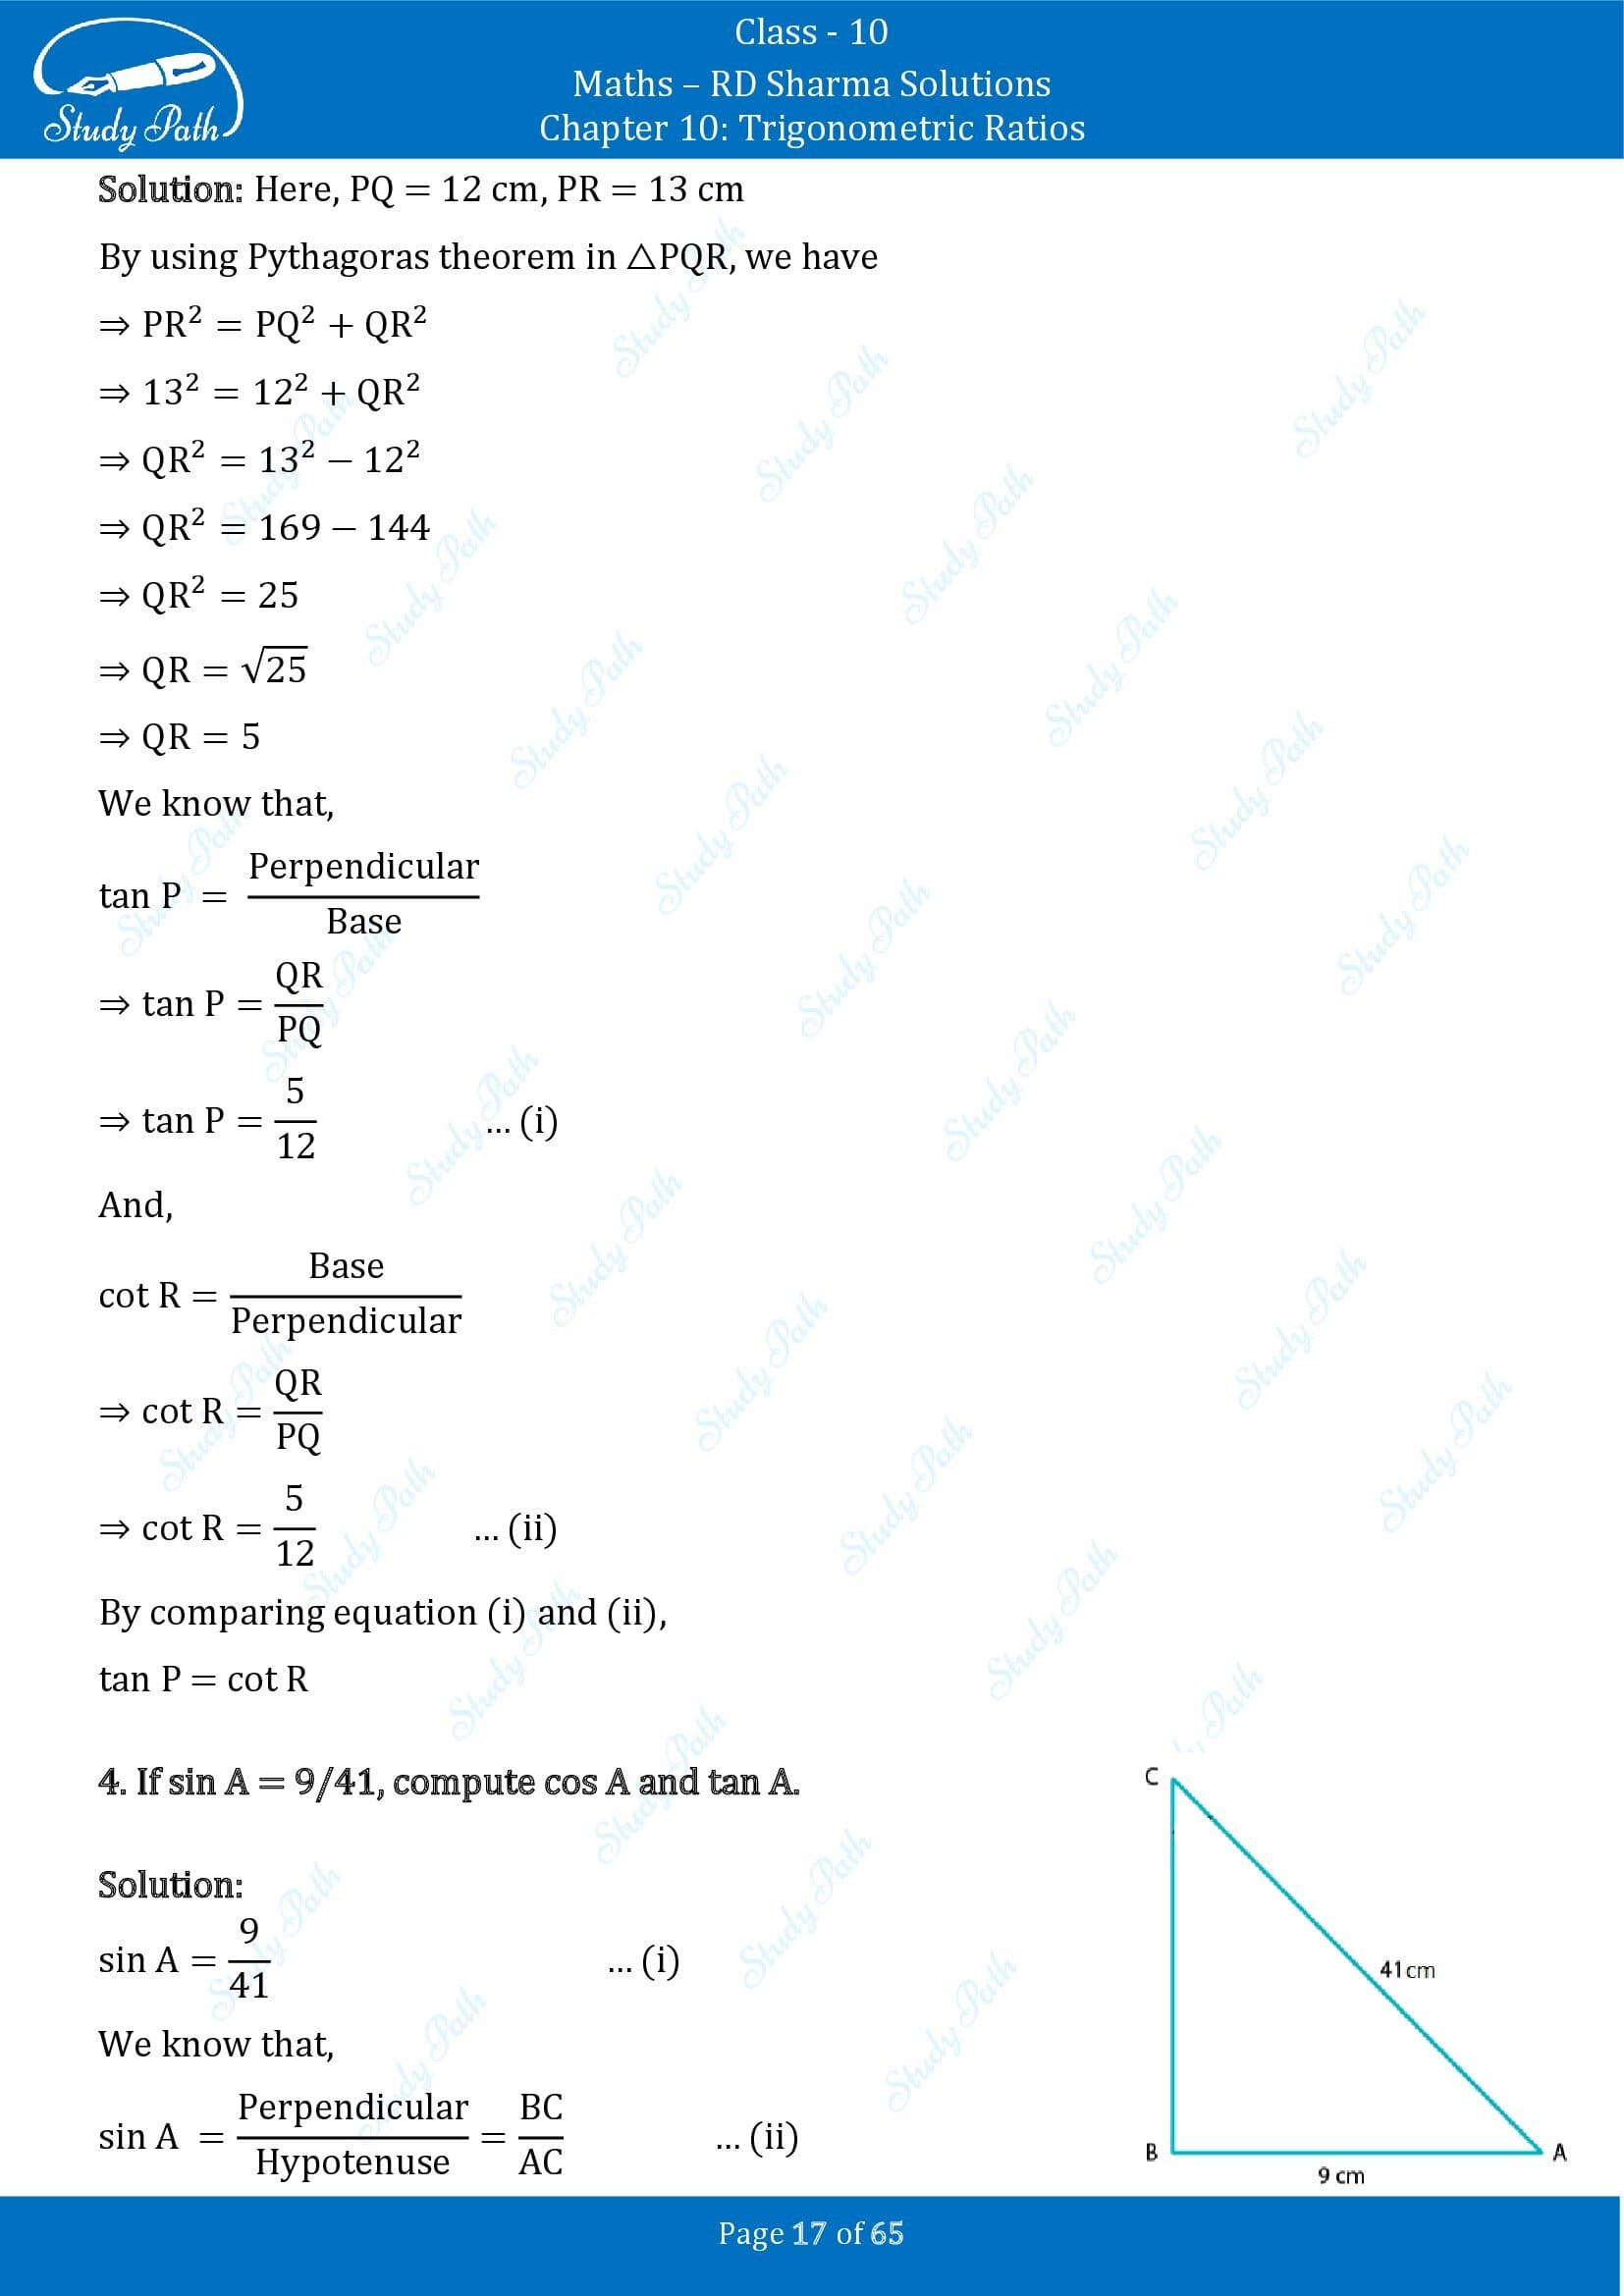 RD Sharma Solutions Class 10 Chapter 10 Trigonometric Ratios Exercise 10.1 00017